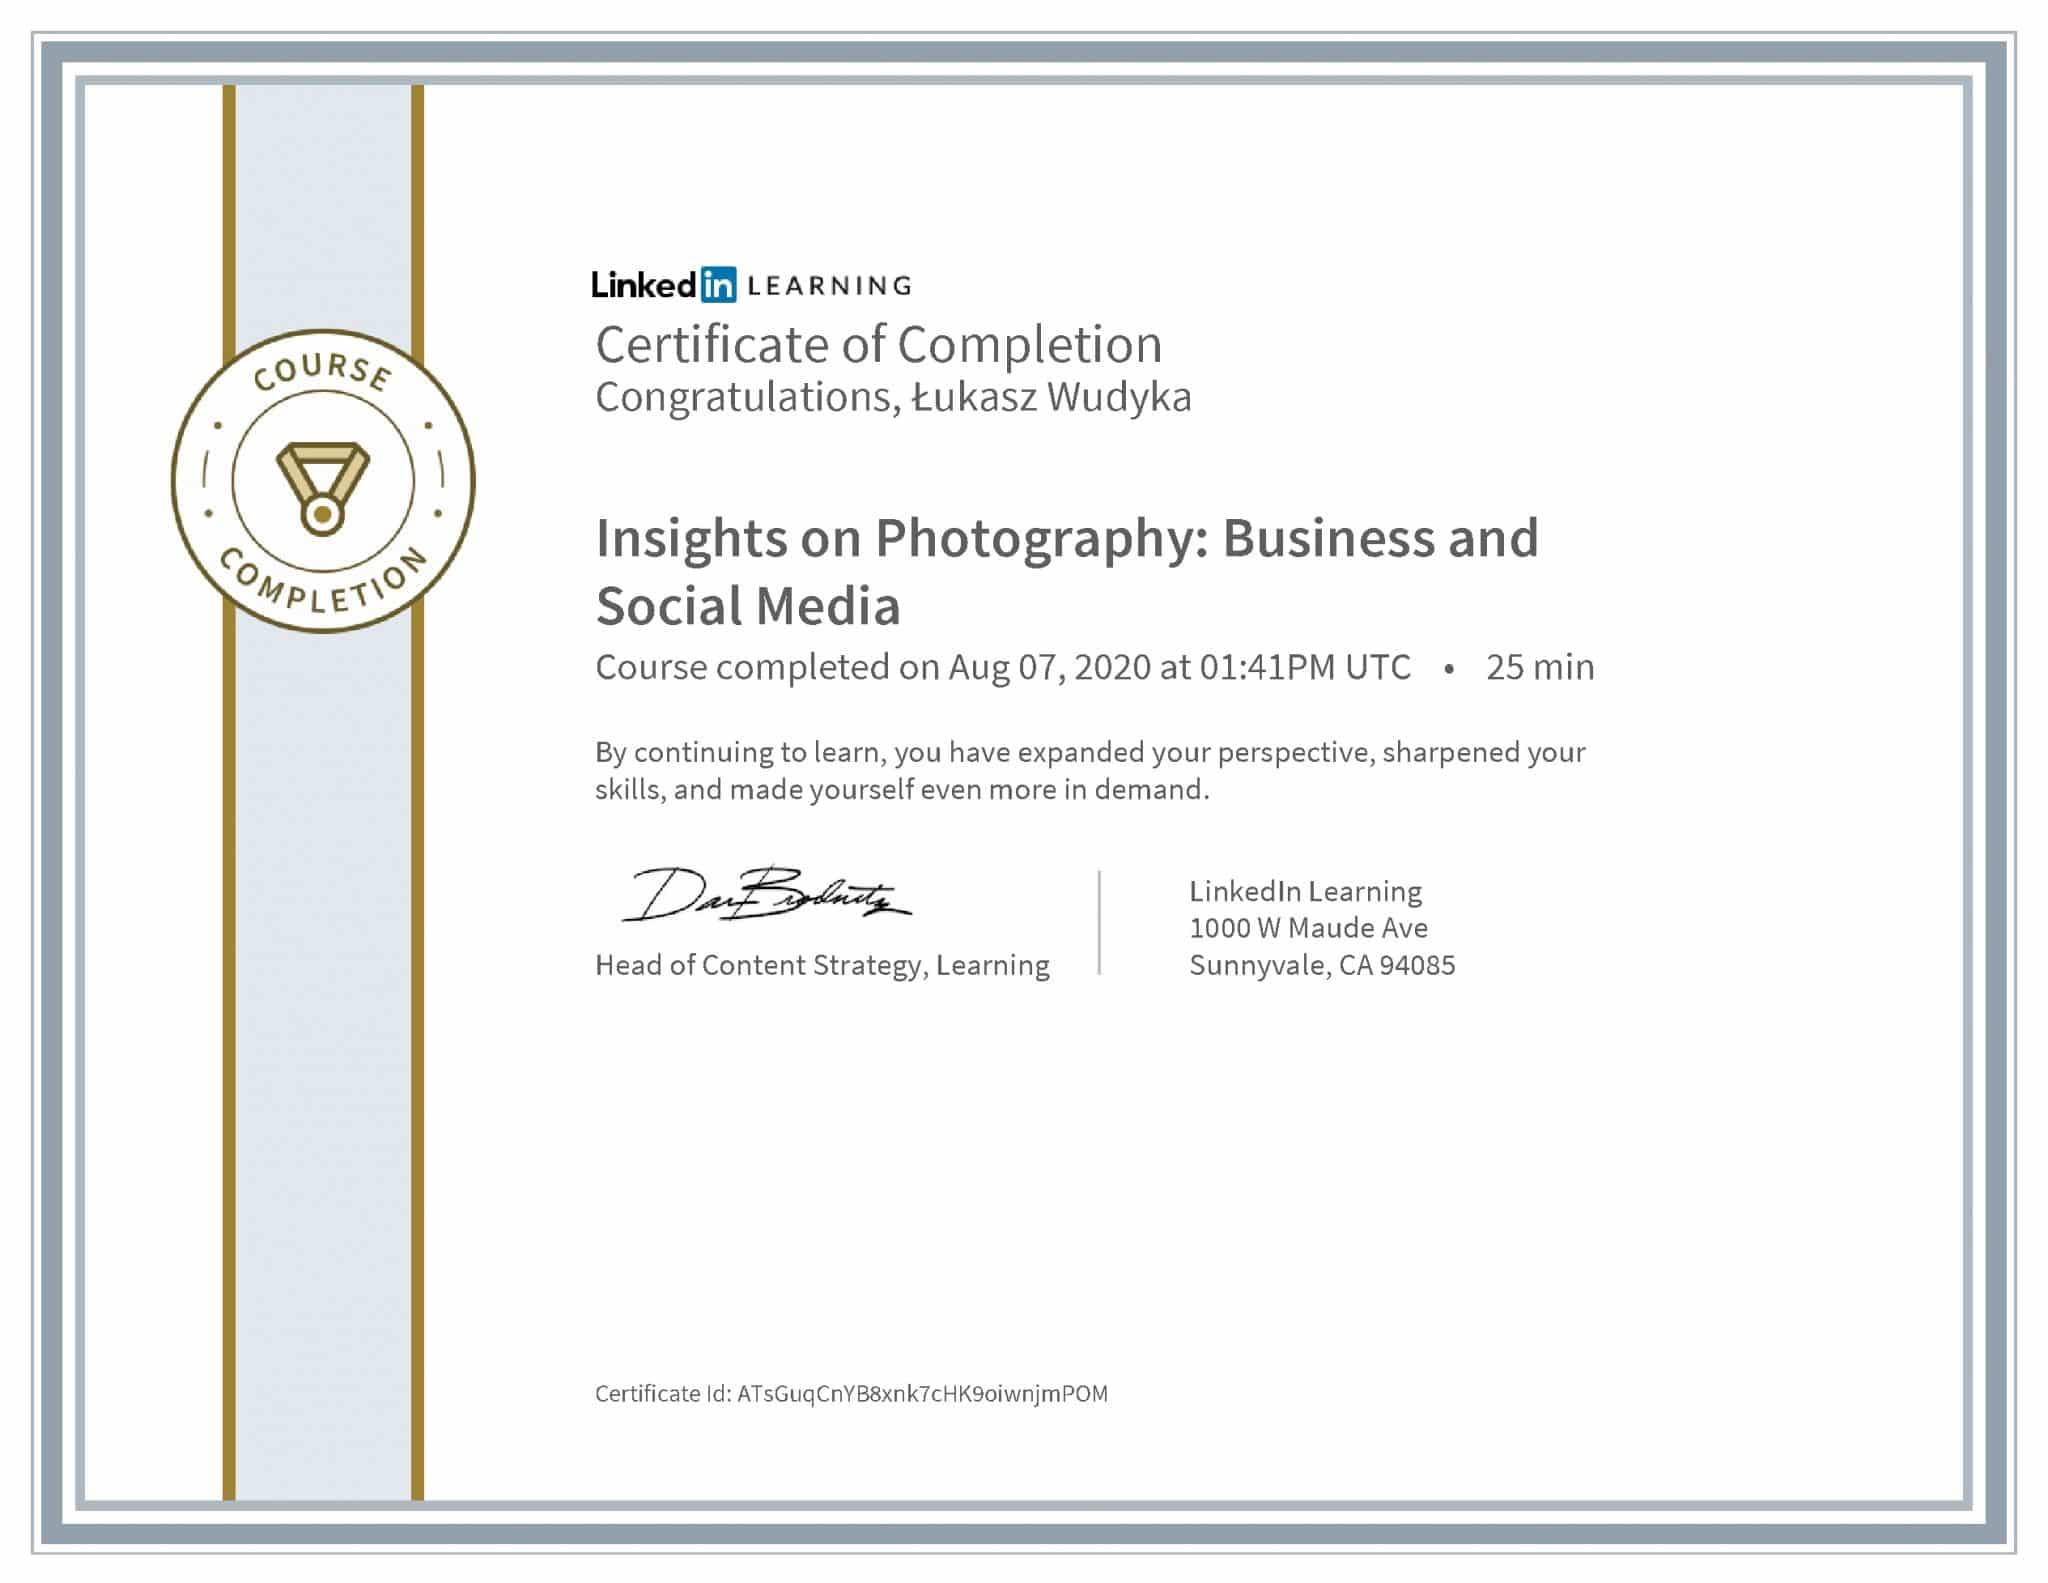 Łukasz Wudyka certyfikat LinkedIn Insights on Photography: Business and Social Media